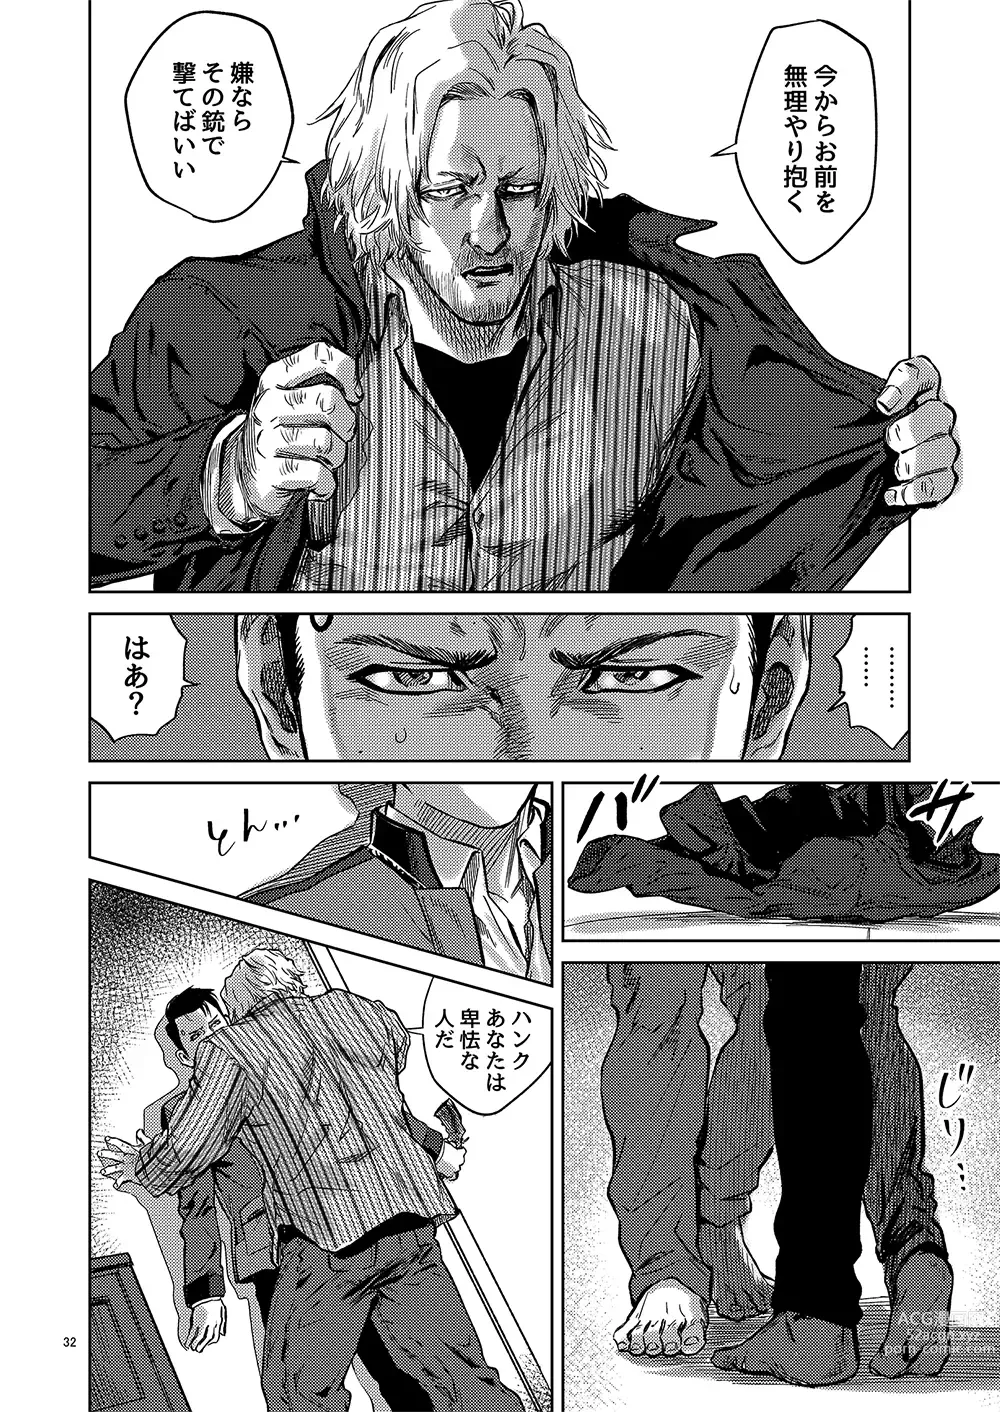 Page 31 of doujinshi Distortion